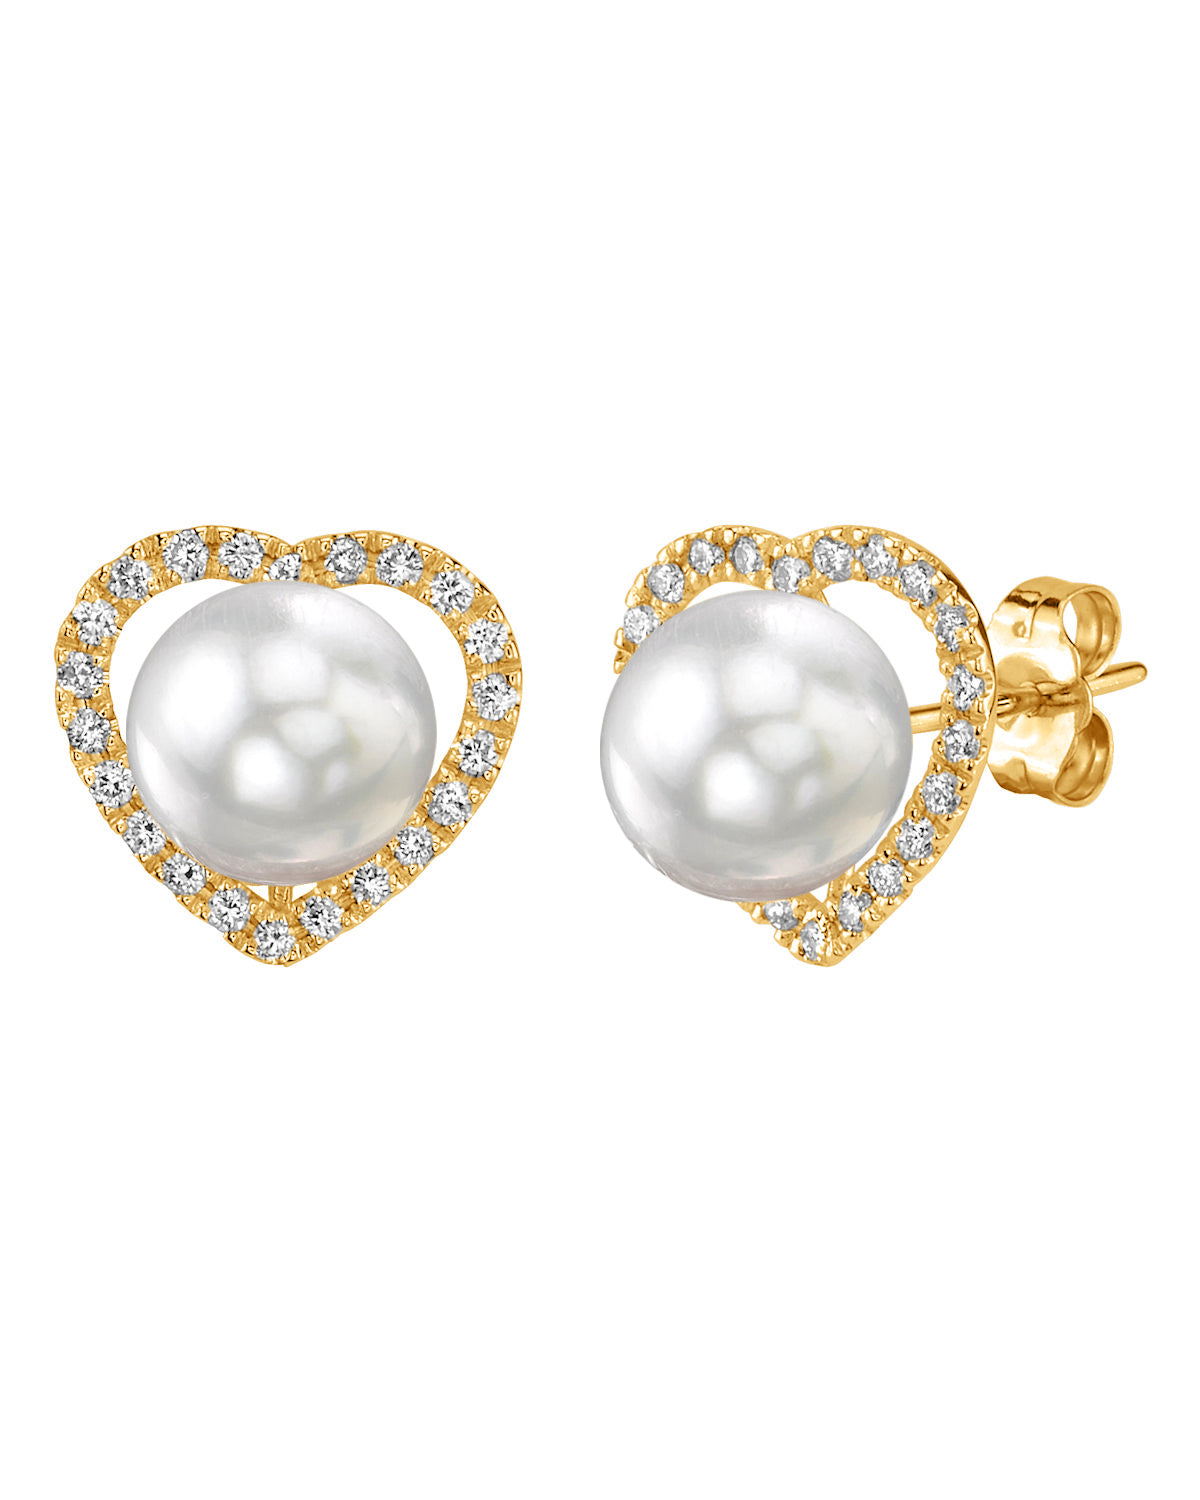 White South Sea Pearl & Diamond Amour Earrings - Third Image